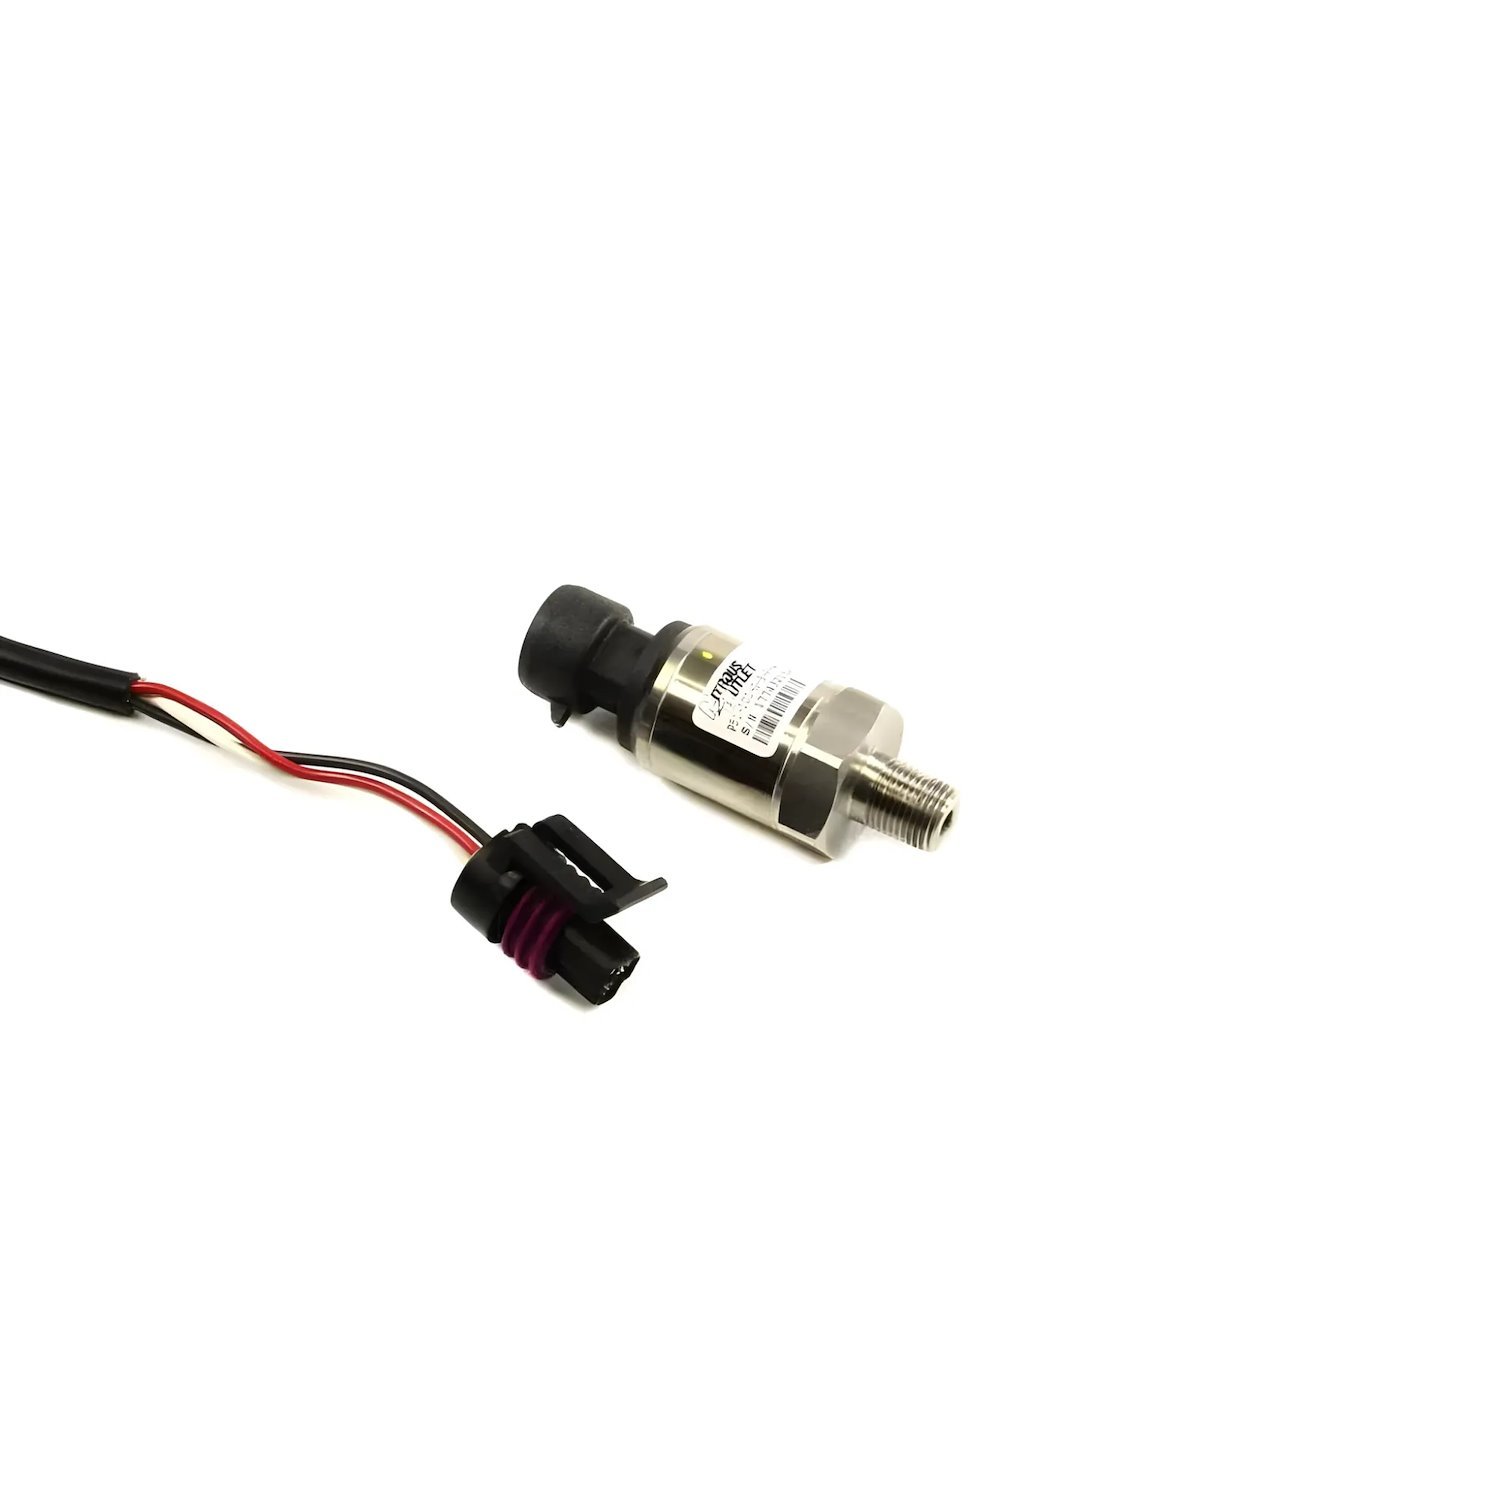 00-61002-FPS ProMax Progressive Controller Fuel Pressure Sensor, 0-100 psi, Includes Harness